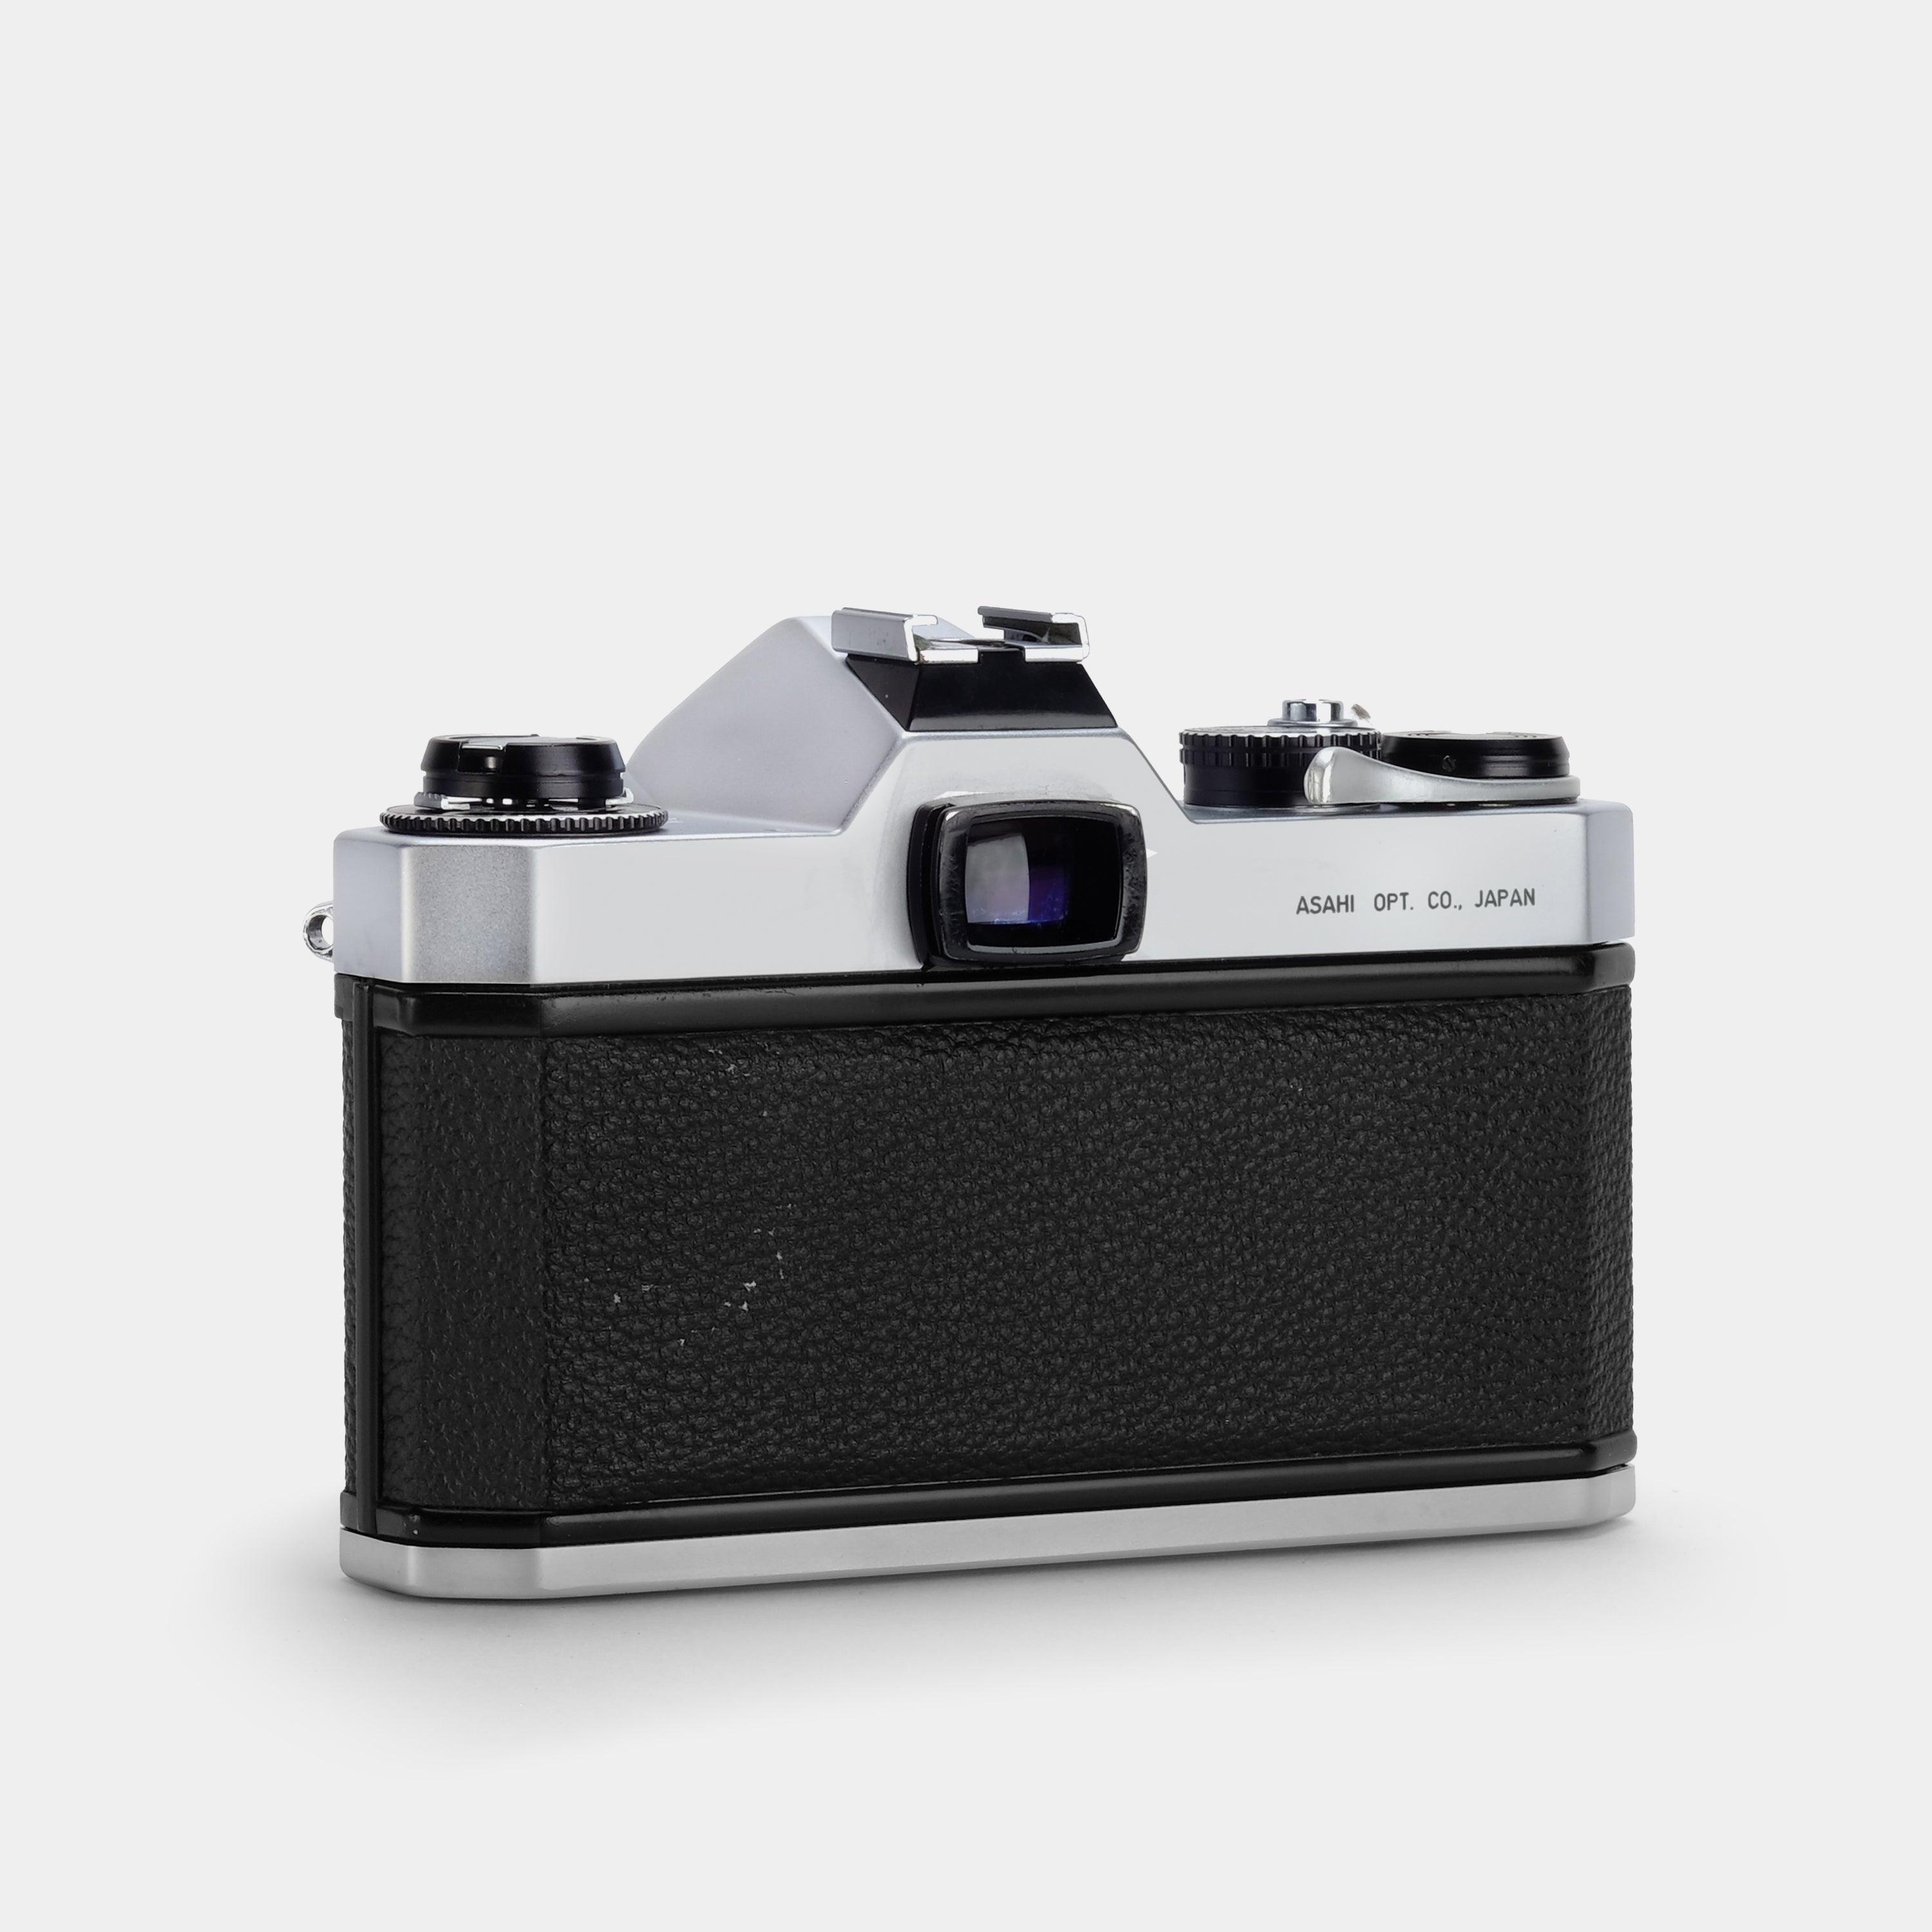 Honeywell Pentax Spotmatic F 35mm SLR Film Camera